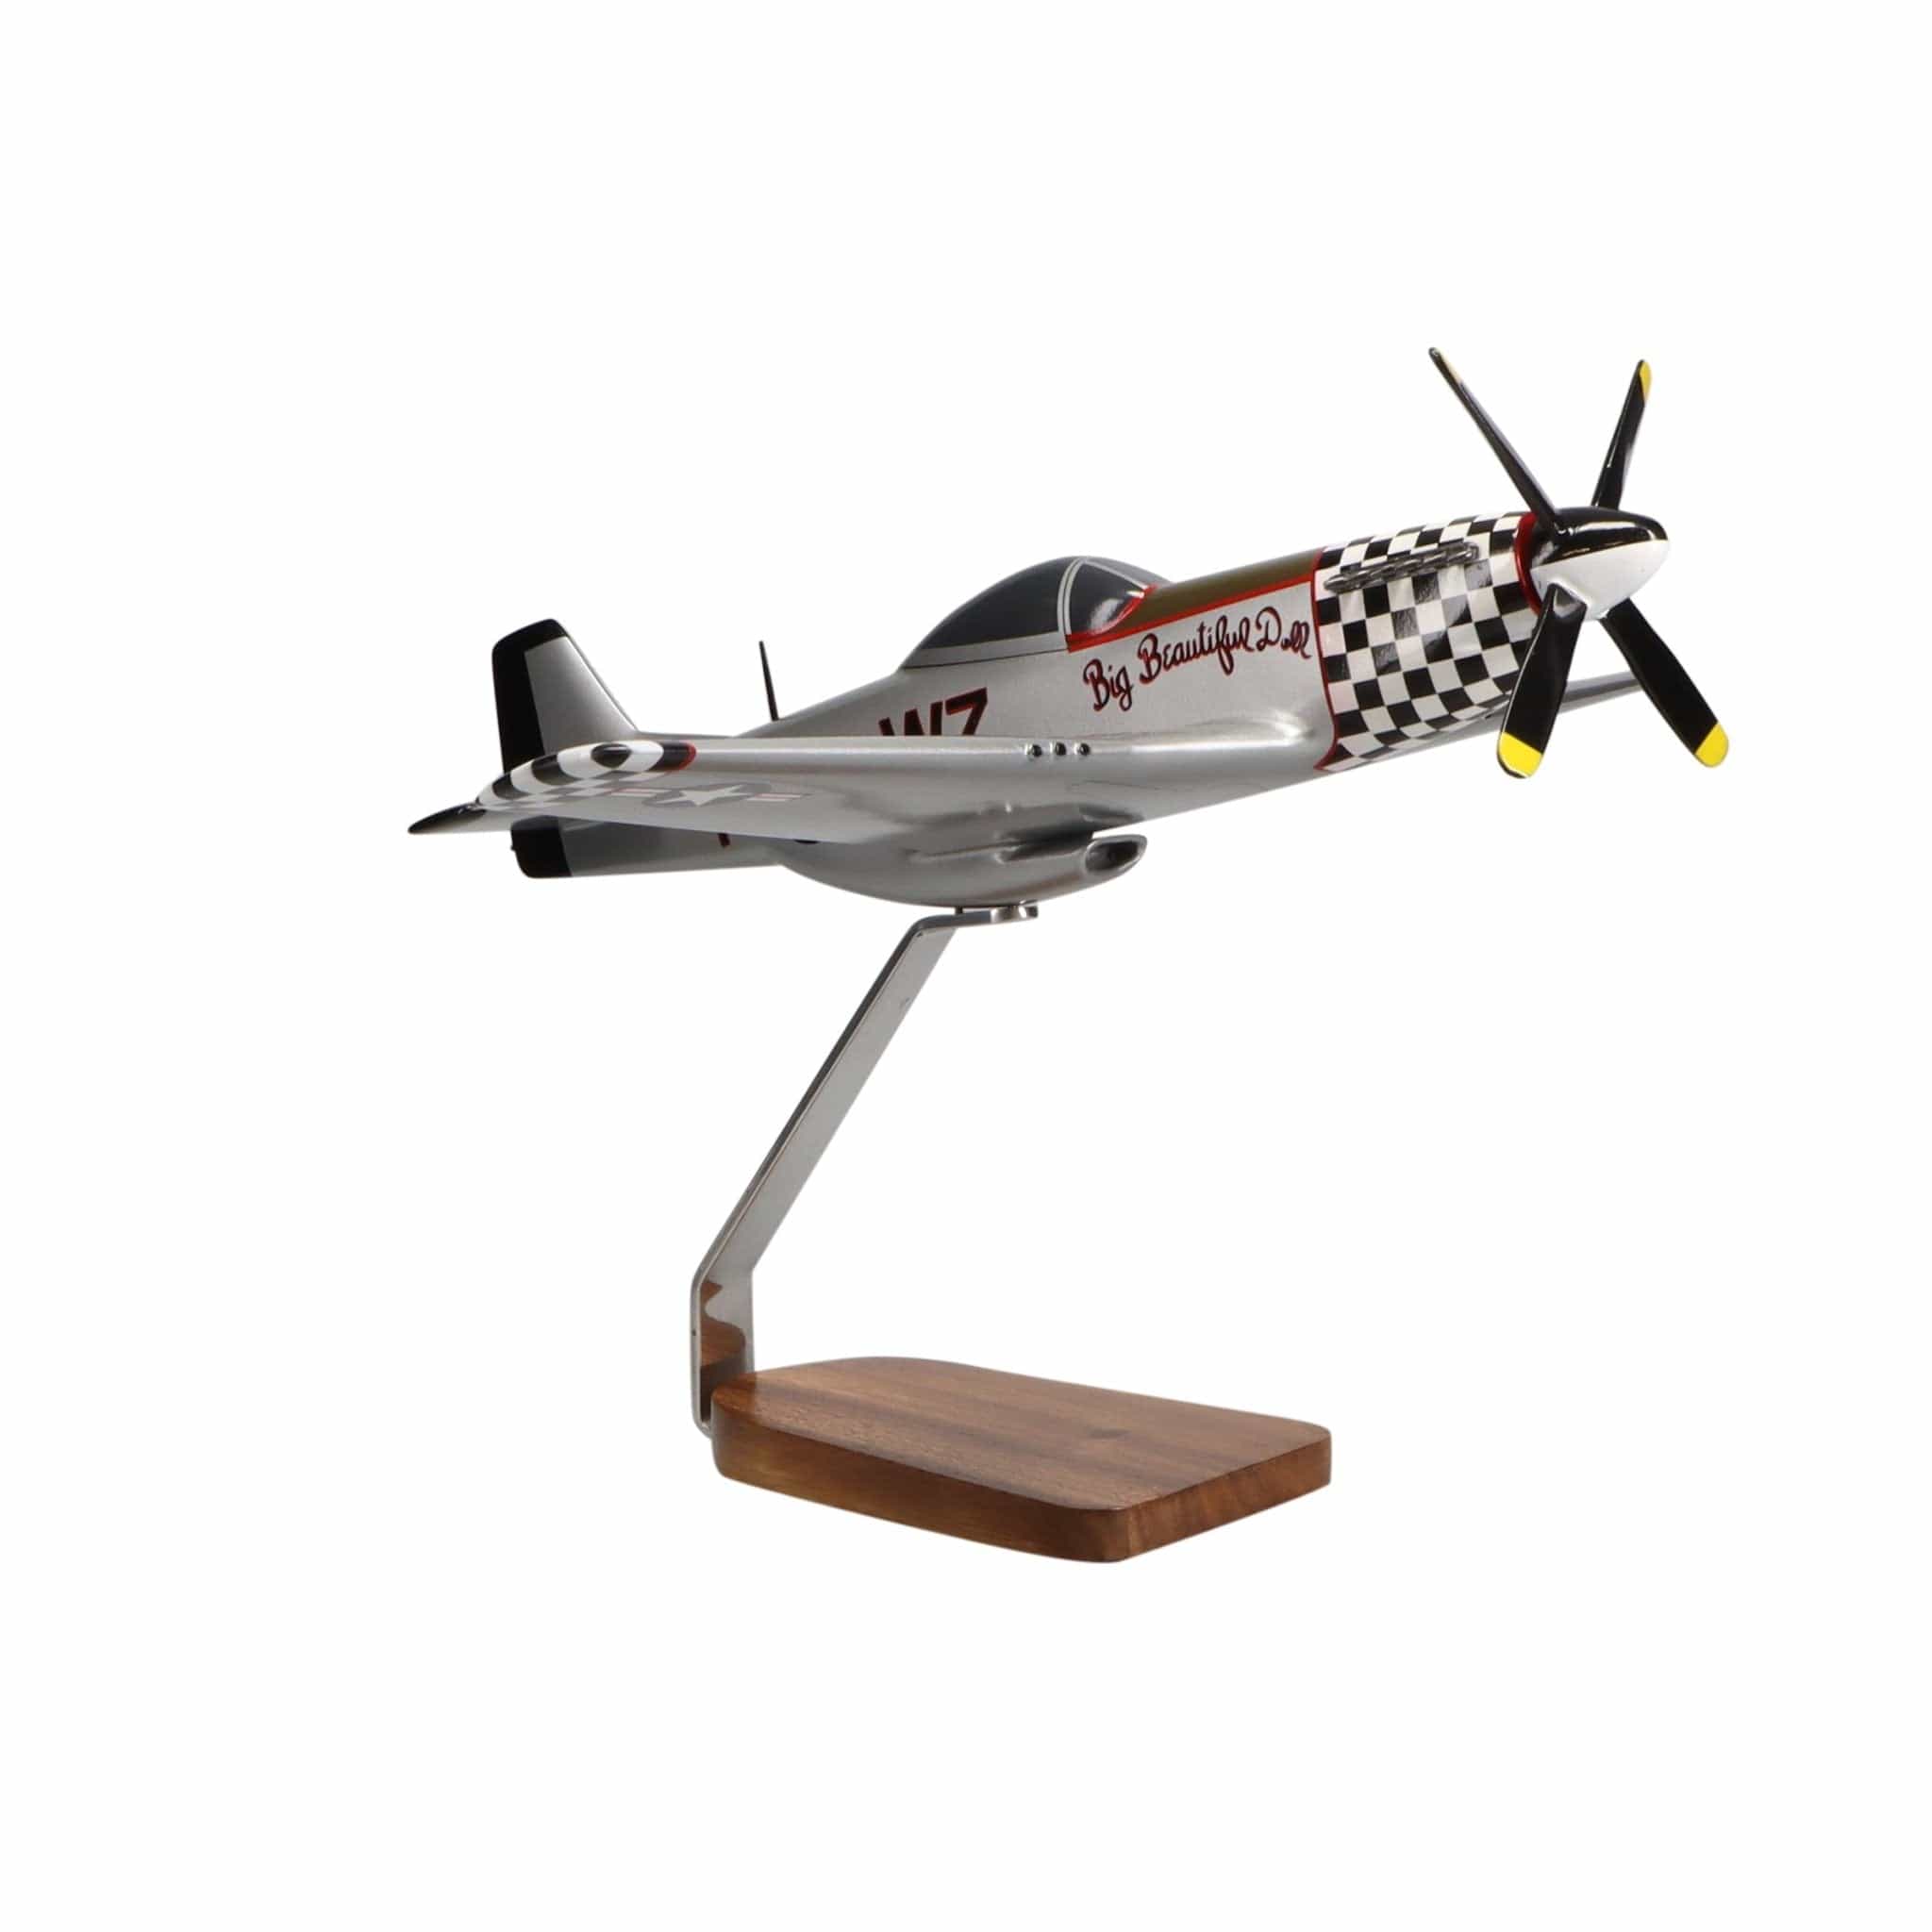 North American P-51D Mustang "Big Beautiful Doll" Large Mahogany Model - PilotMall.com